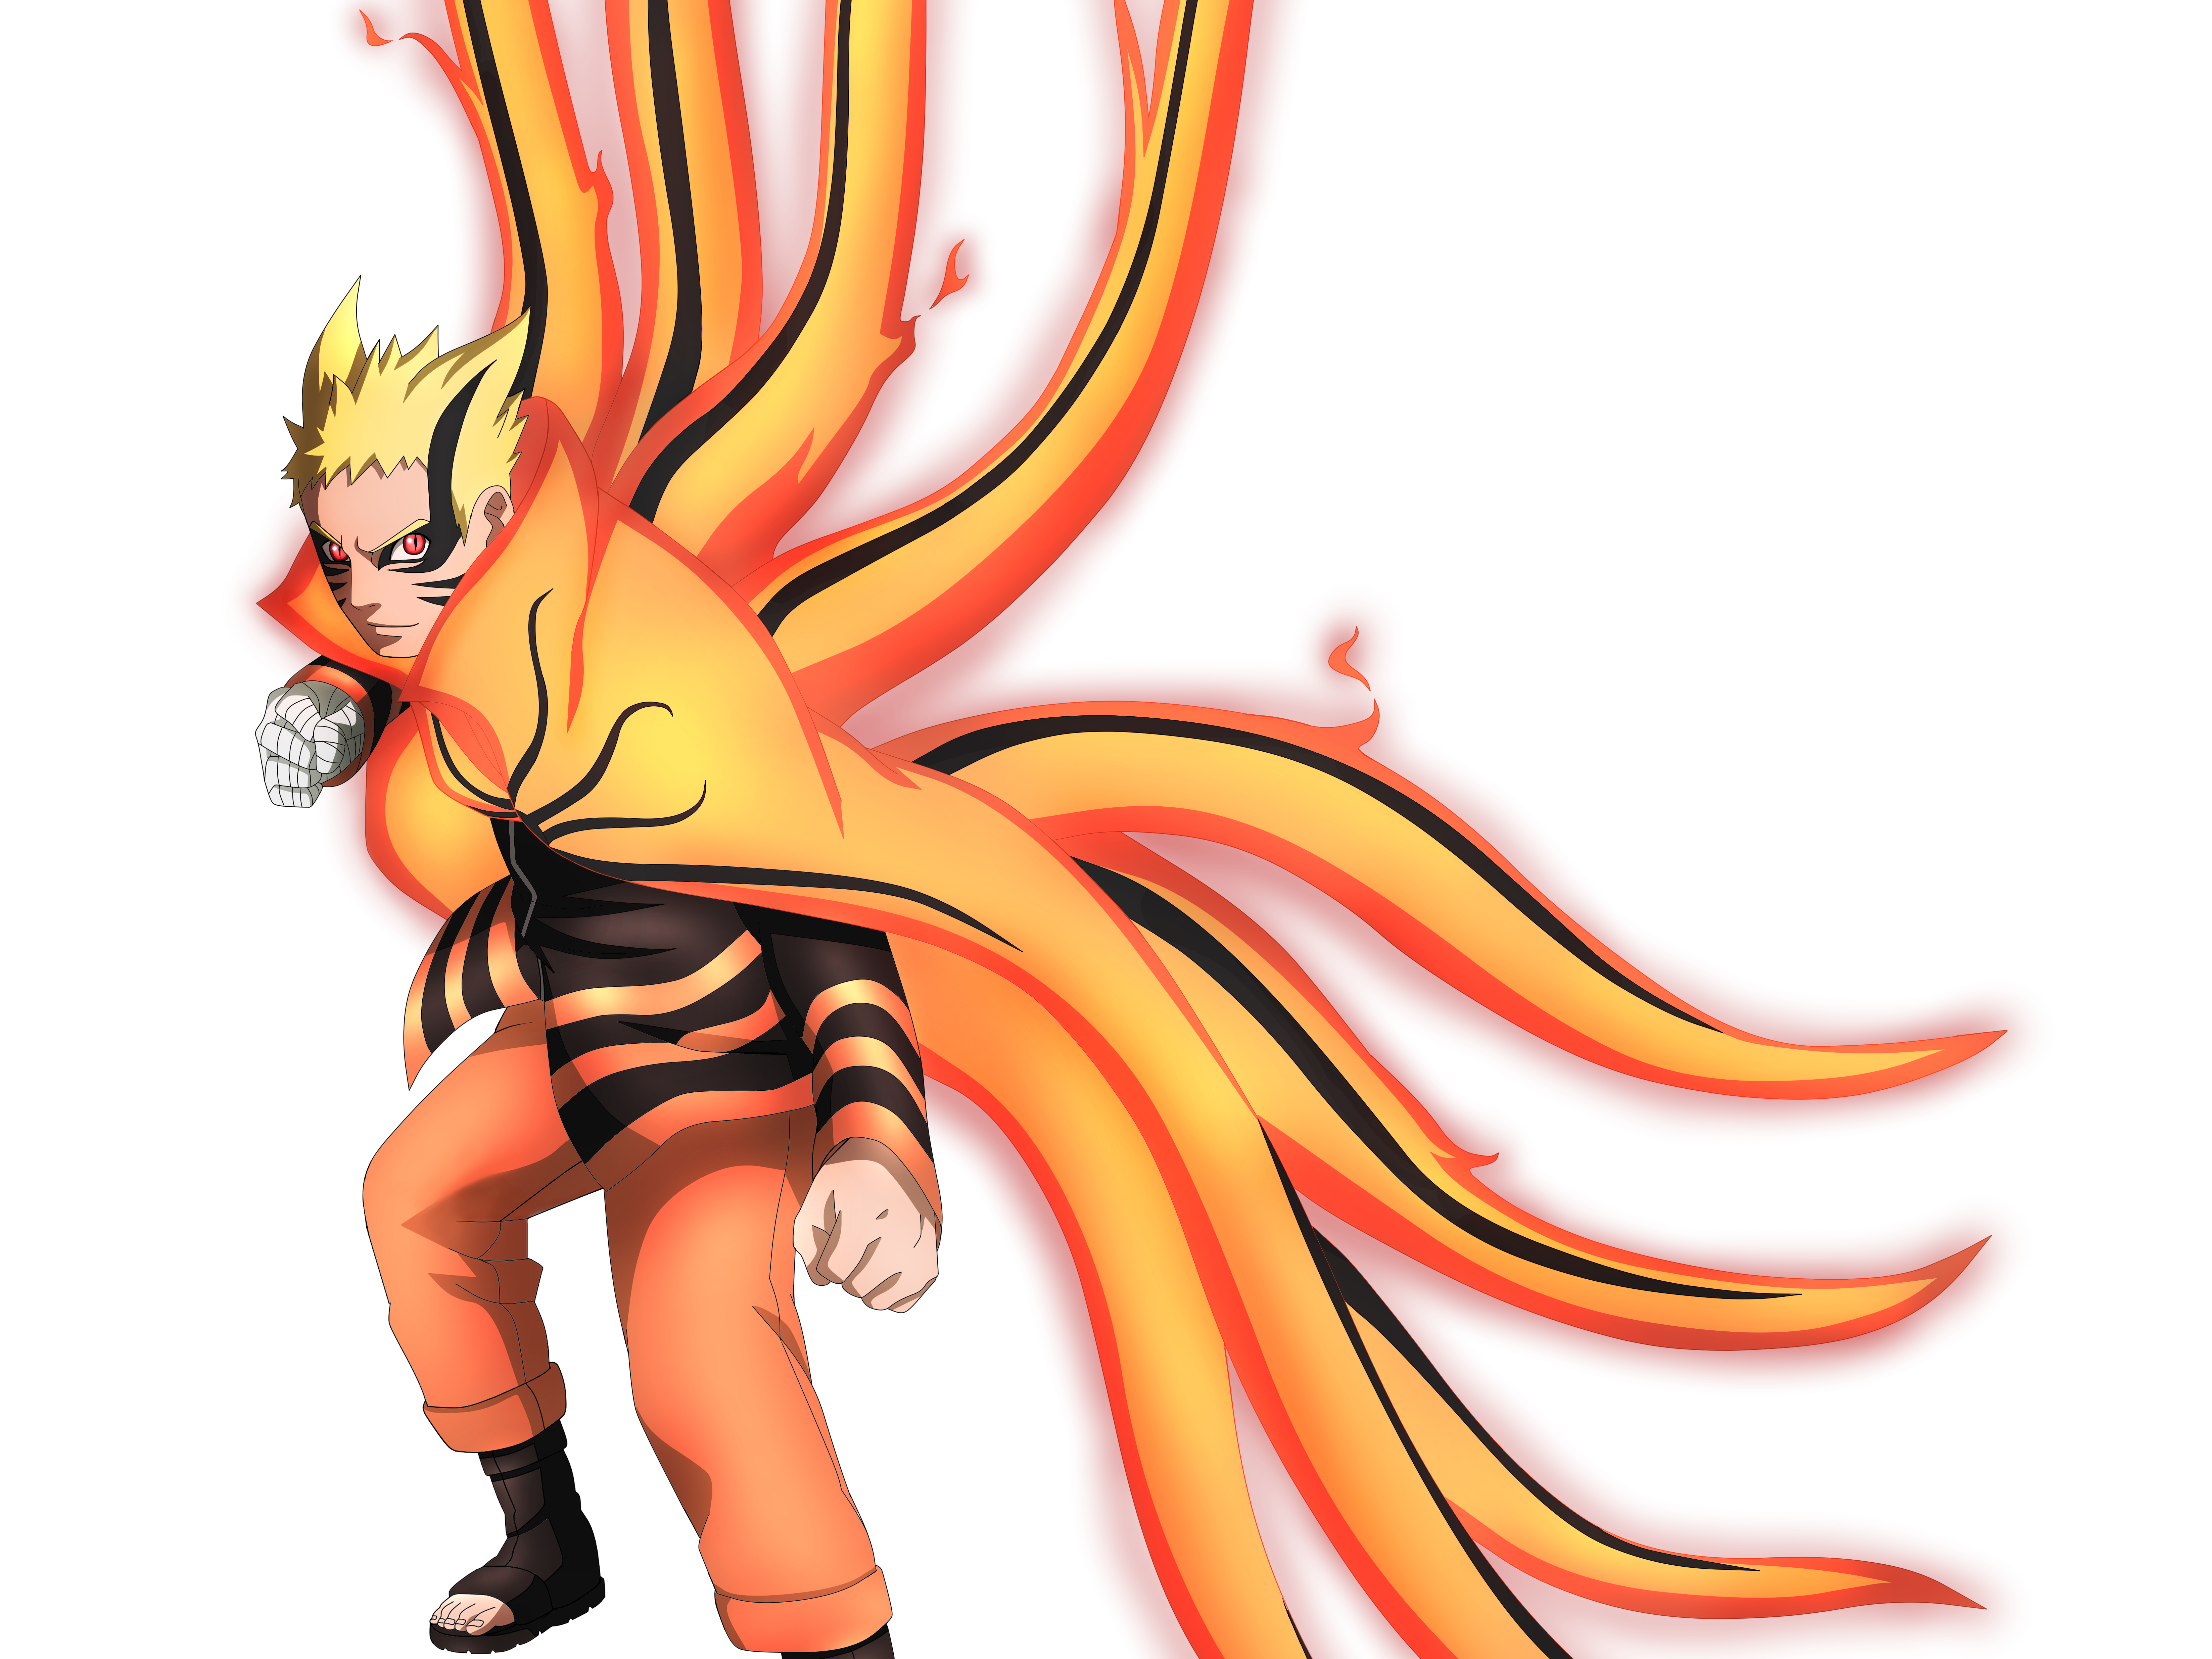 Baryon Mode Naruto 4k Ultra HD Wallpaper Background Image